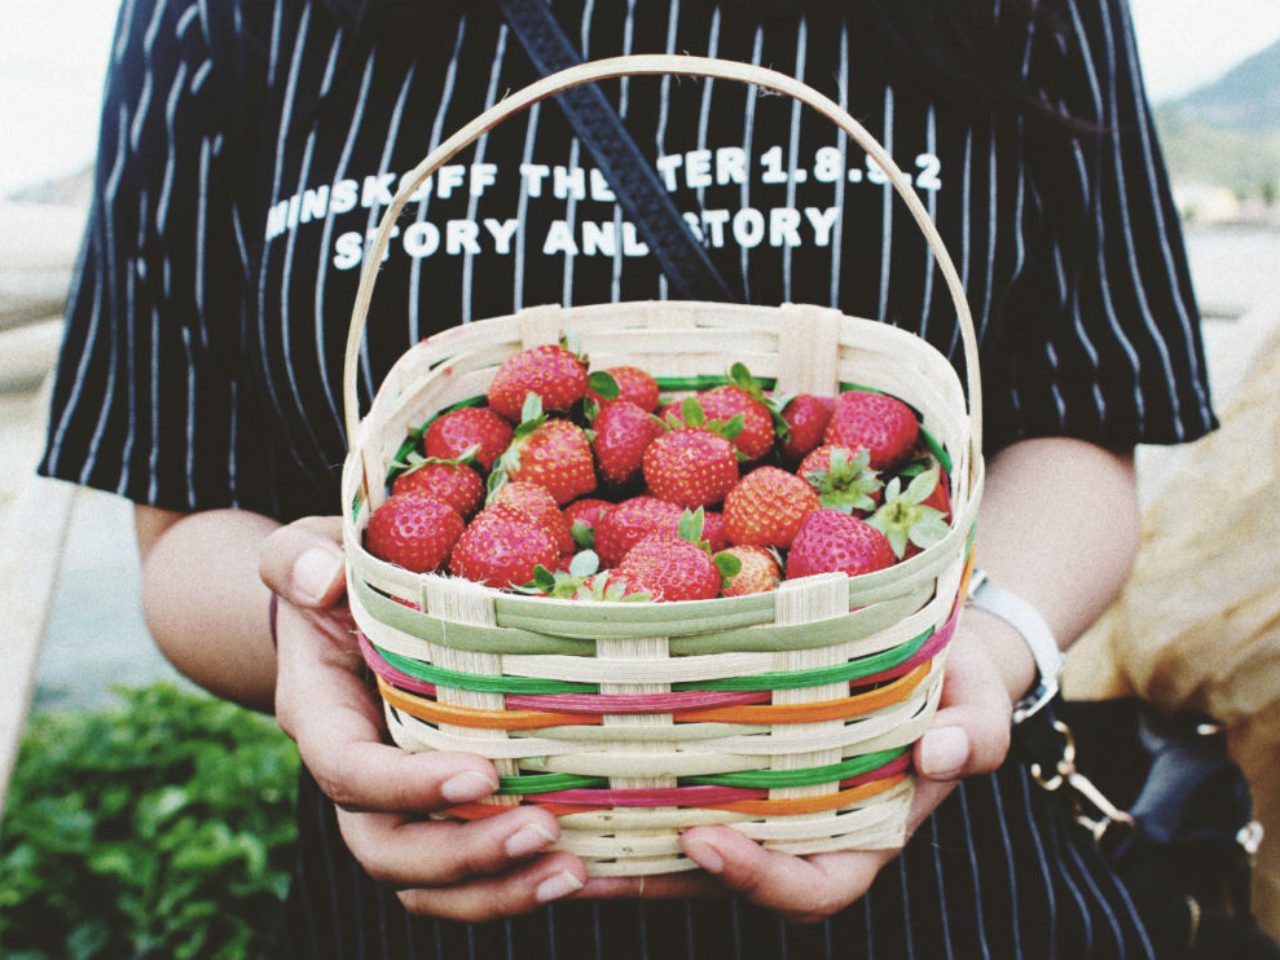 woman-holding-basket-filled-with-strawberries-photo-bryan-burgos-unsplash